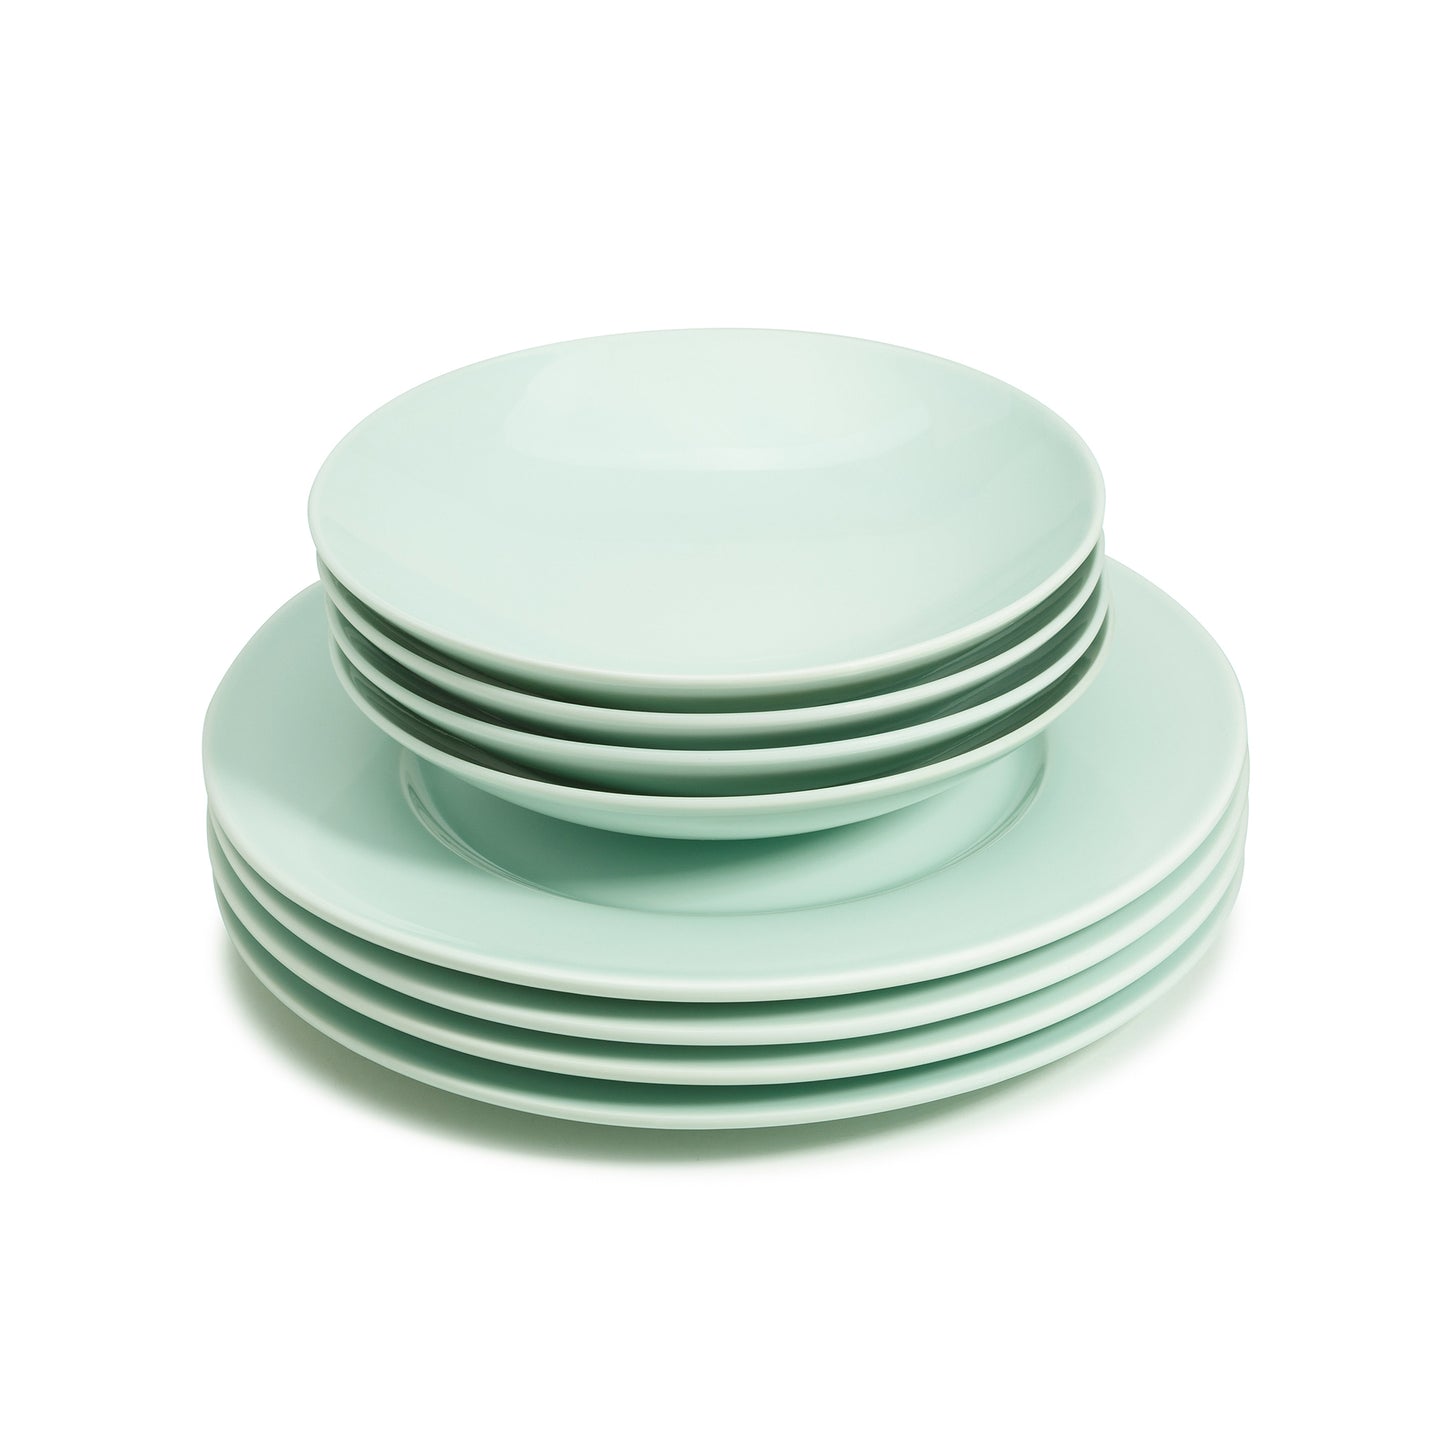 8 piece green celadon porcelain dinnerware set, 11 3/4" wide rim dinner plates, 8" salad/soup bowls, media 4 of 6